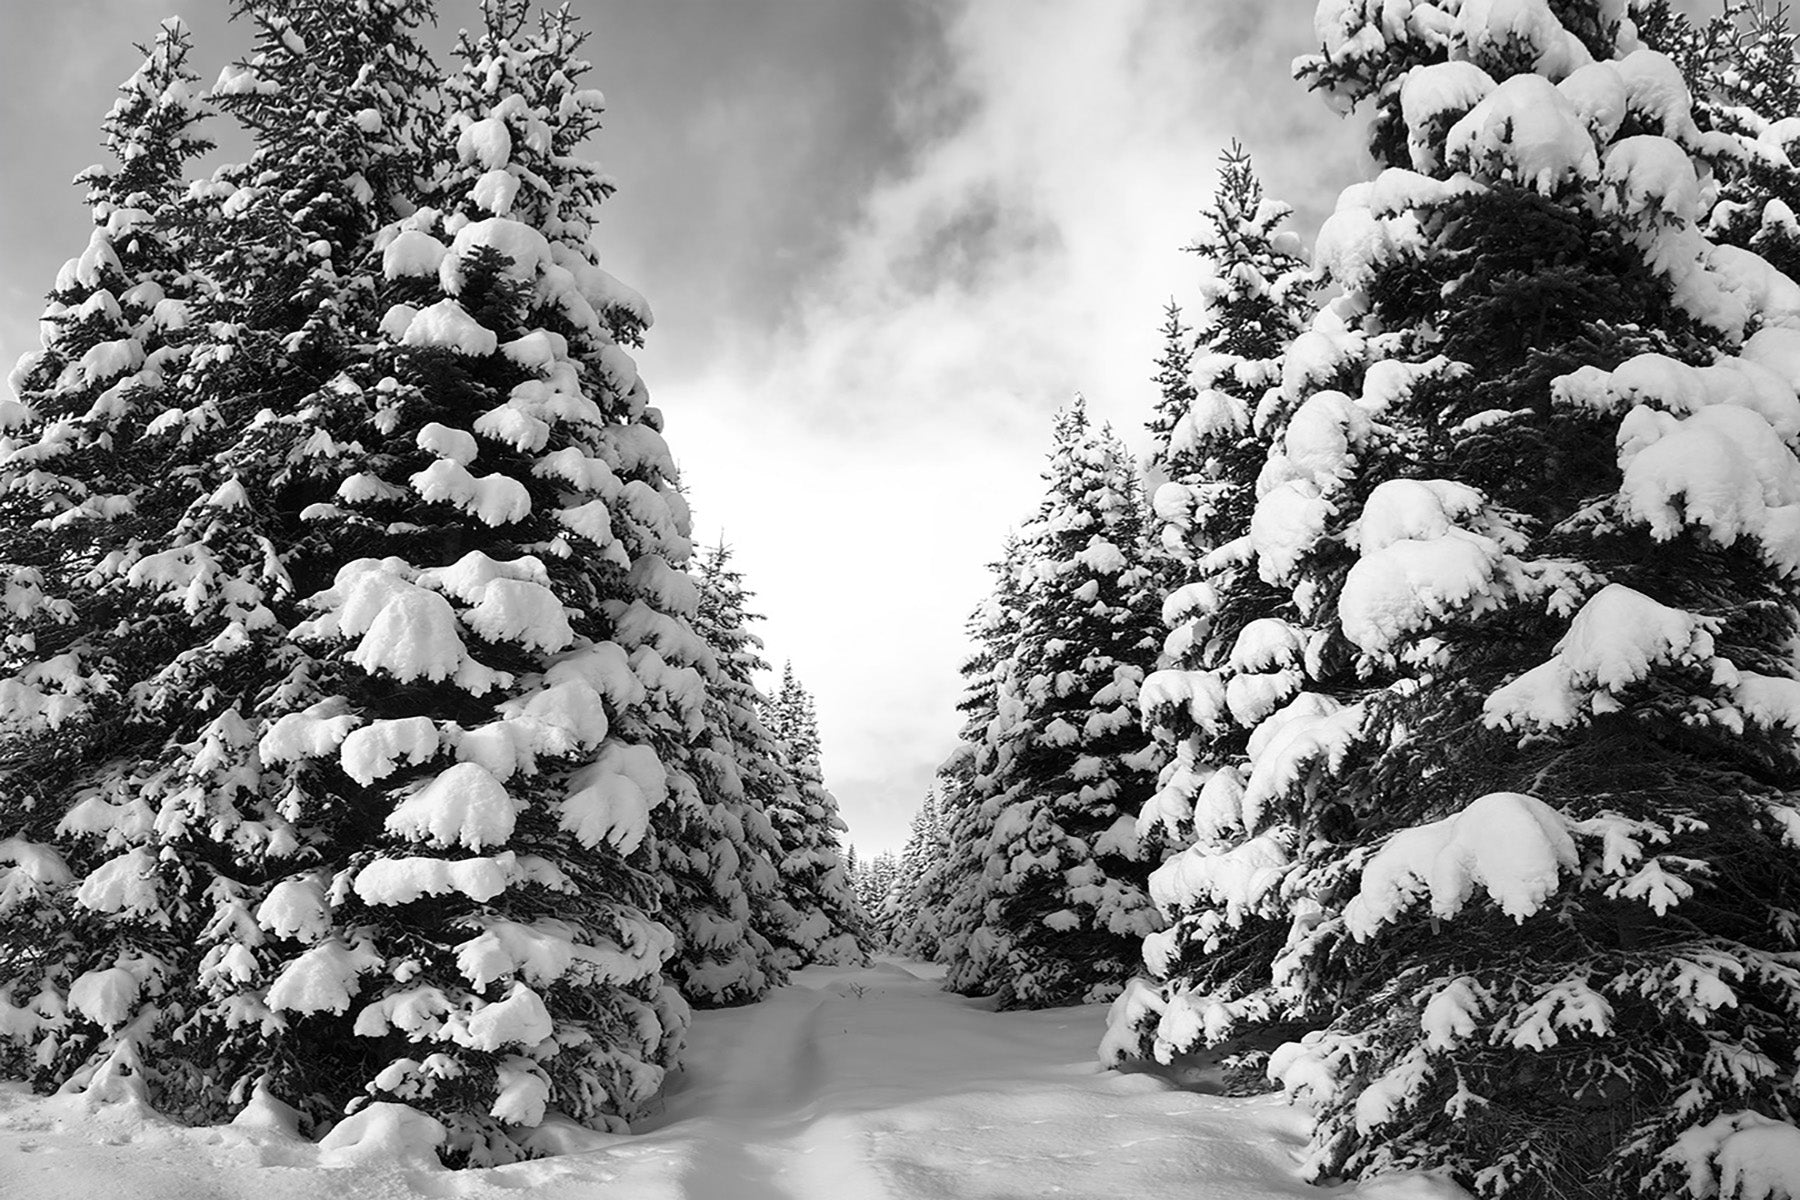 Walkway Through the Trees - Black & White Photographic Print